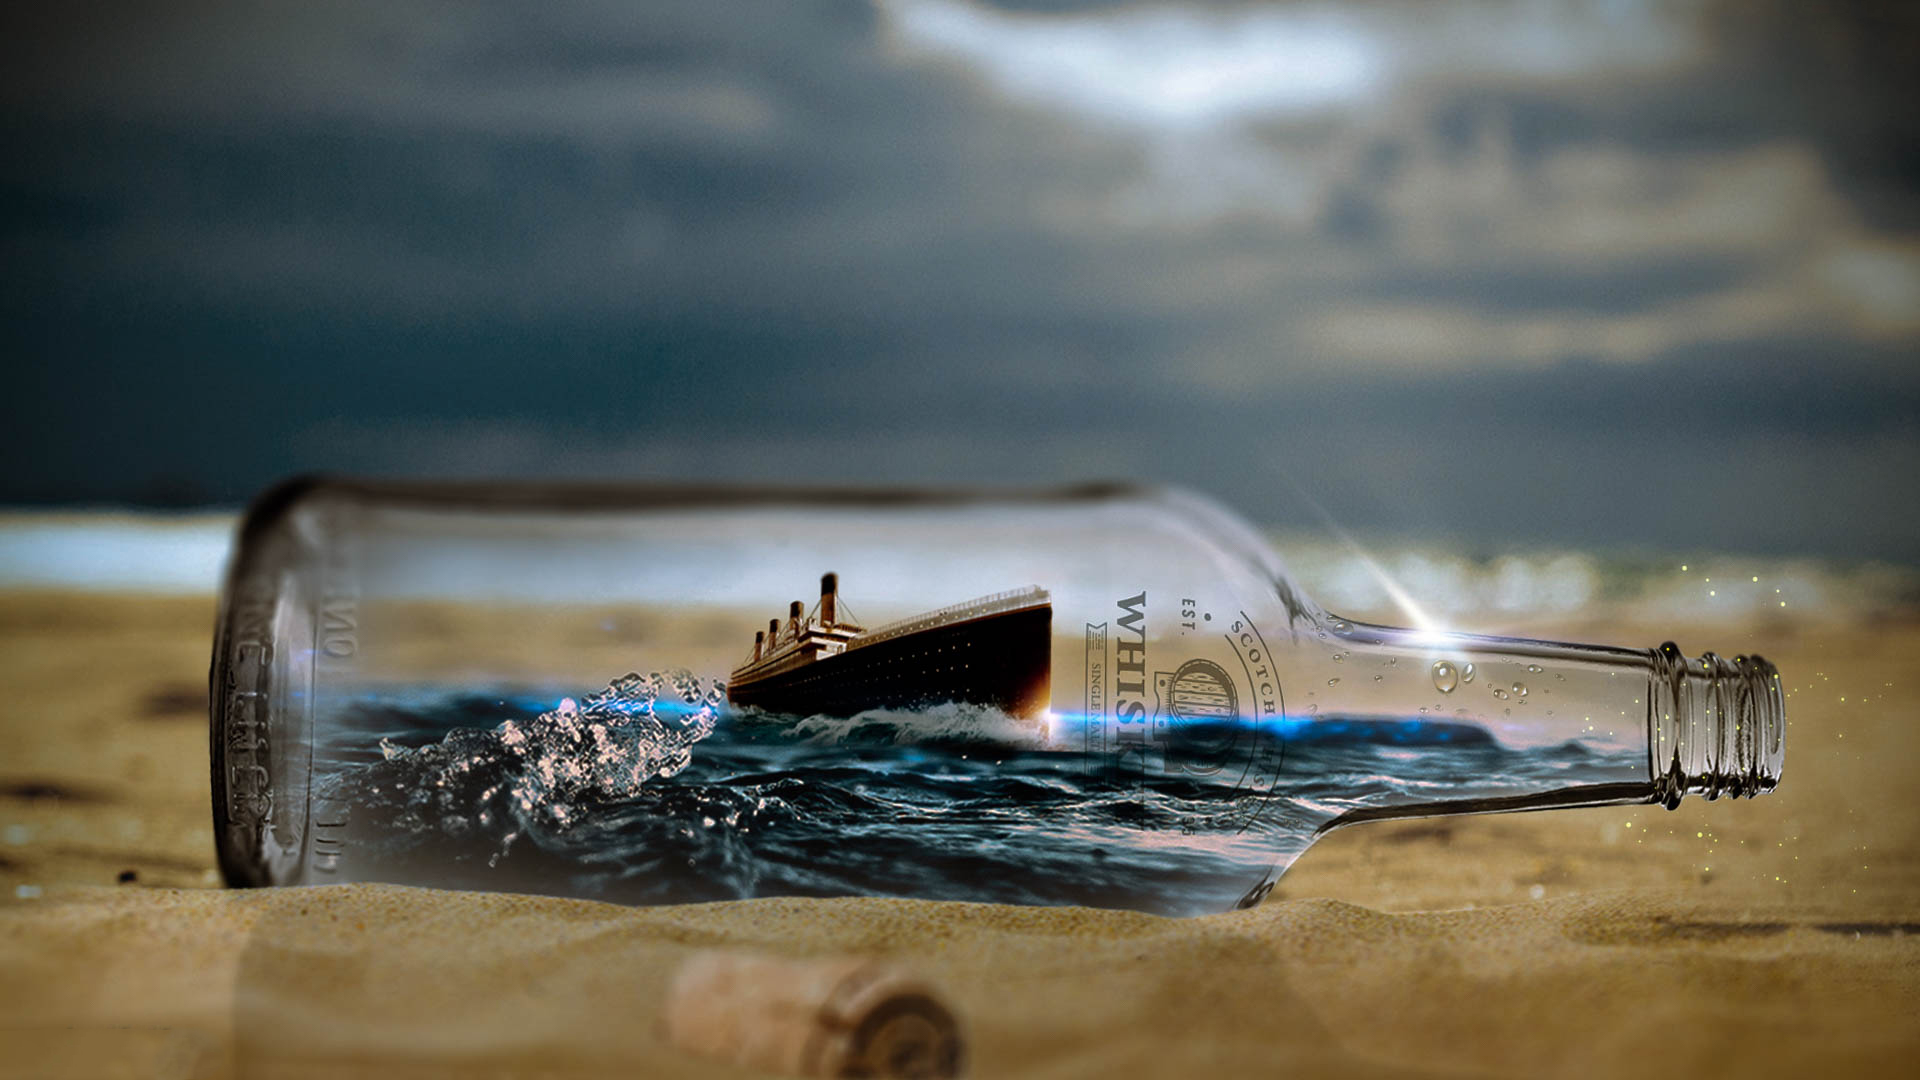 Titanic in a Bottle by zapdosify